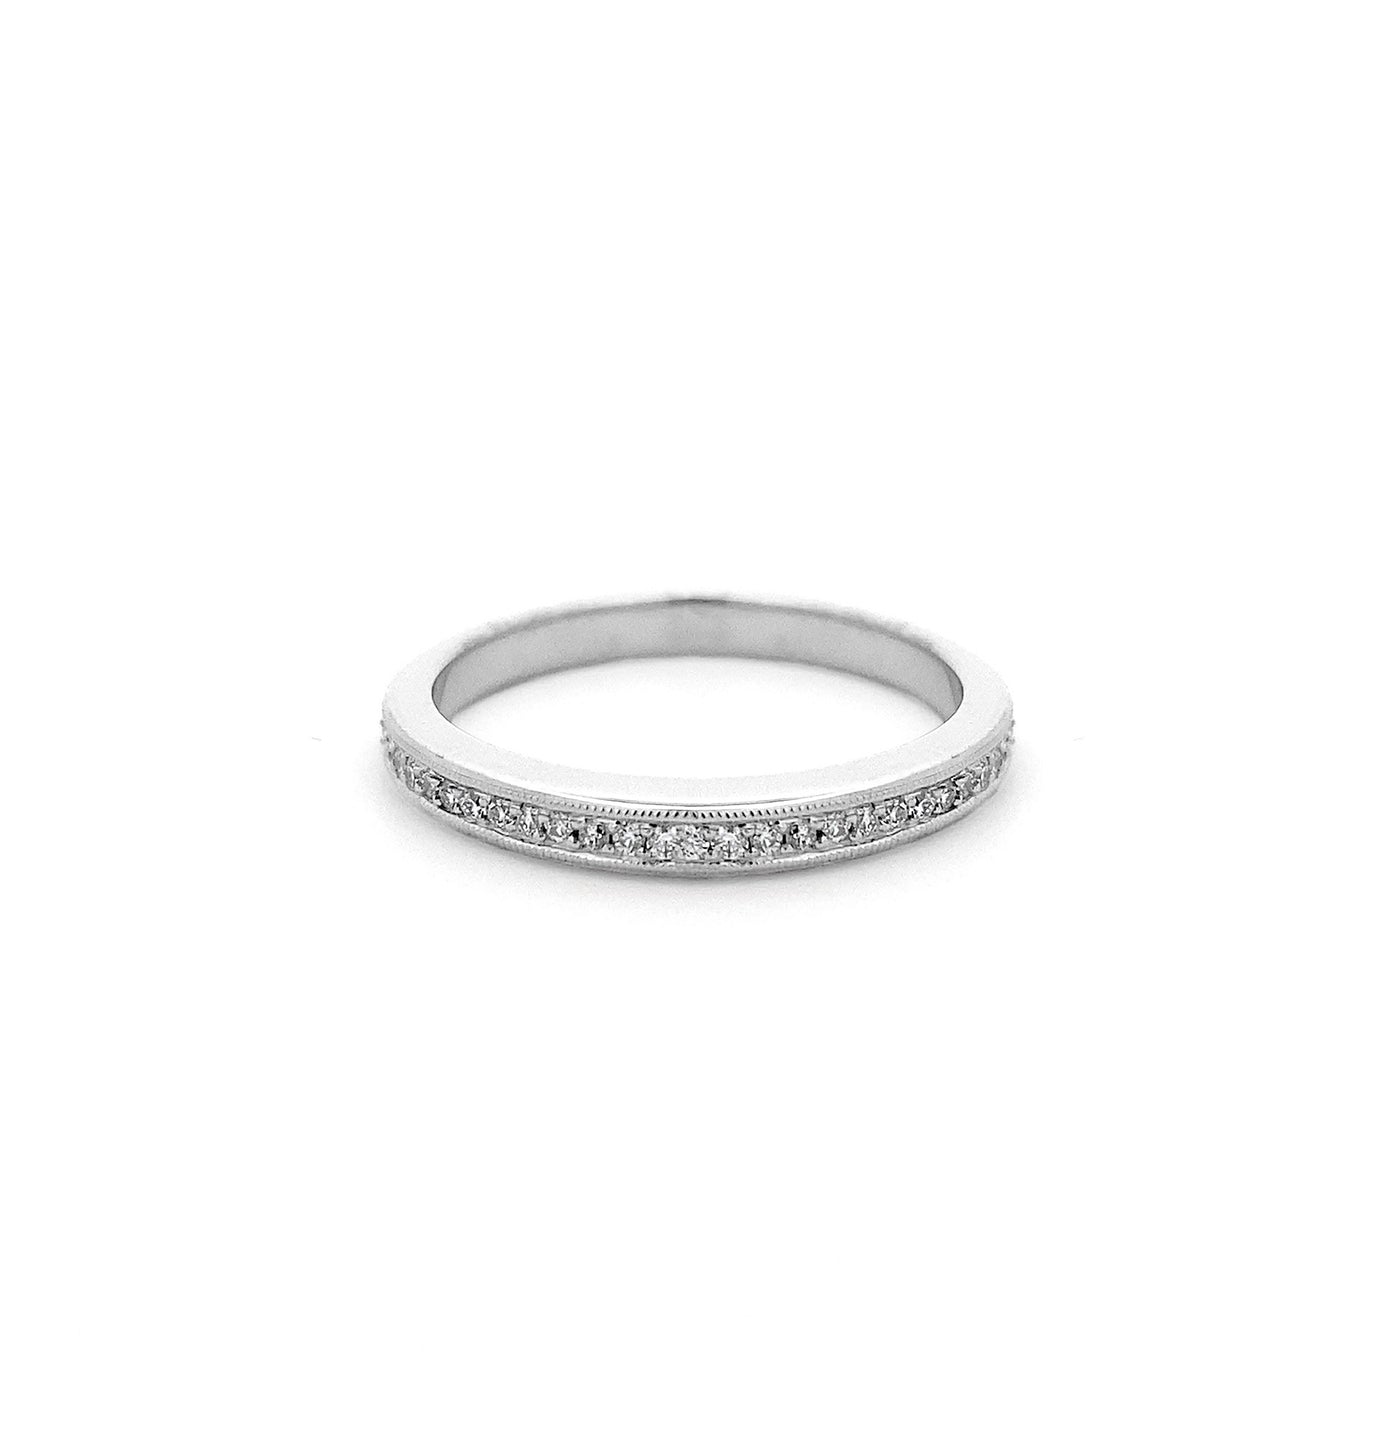 Brilliant Cut Diamond Ring with Milgrain Edge in White Gold | 0.18ctw